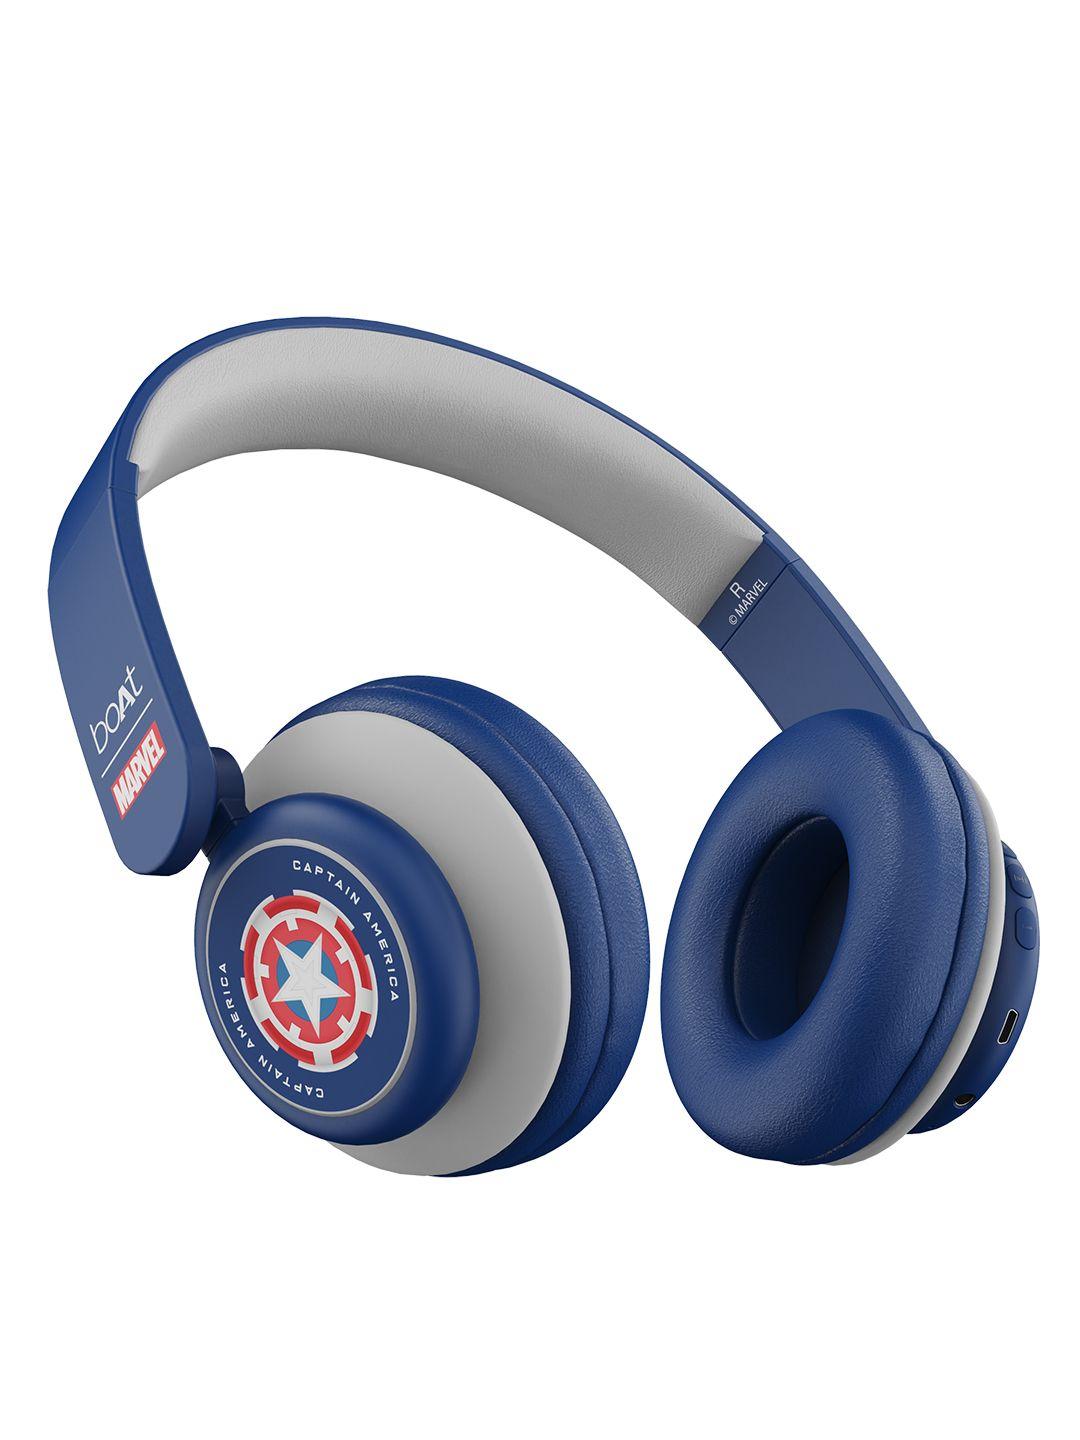 boat rockerz 450 m marvel edition wireless headphones - soldier's blue